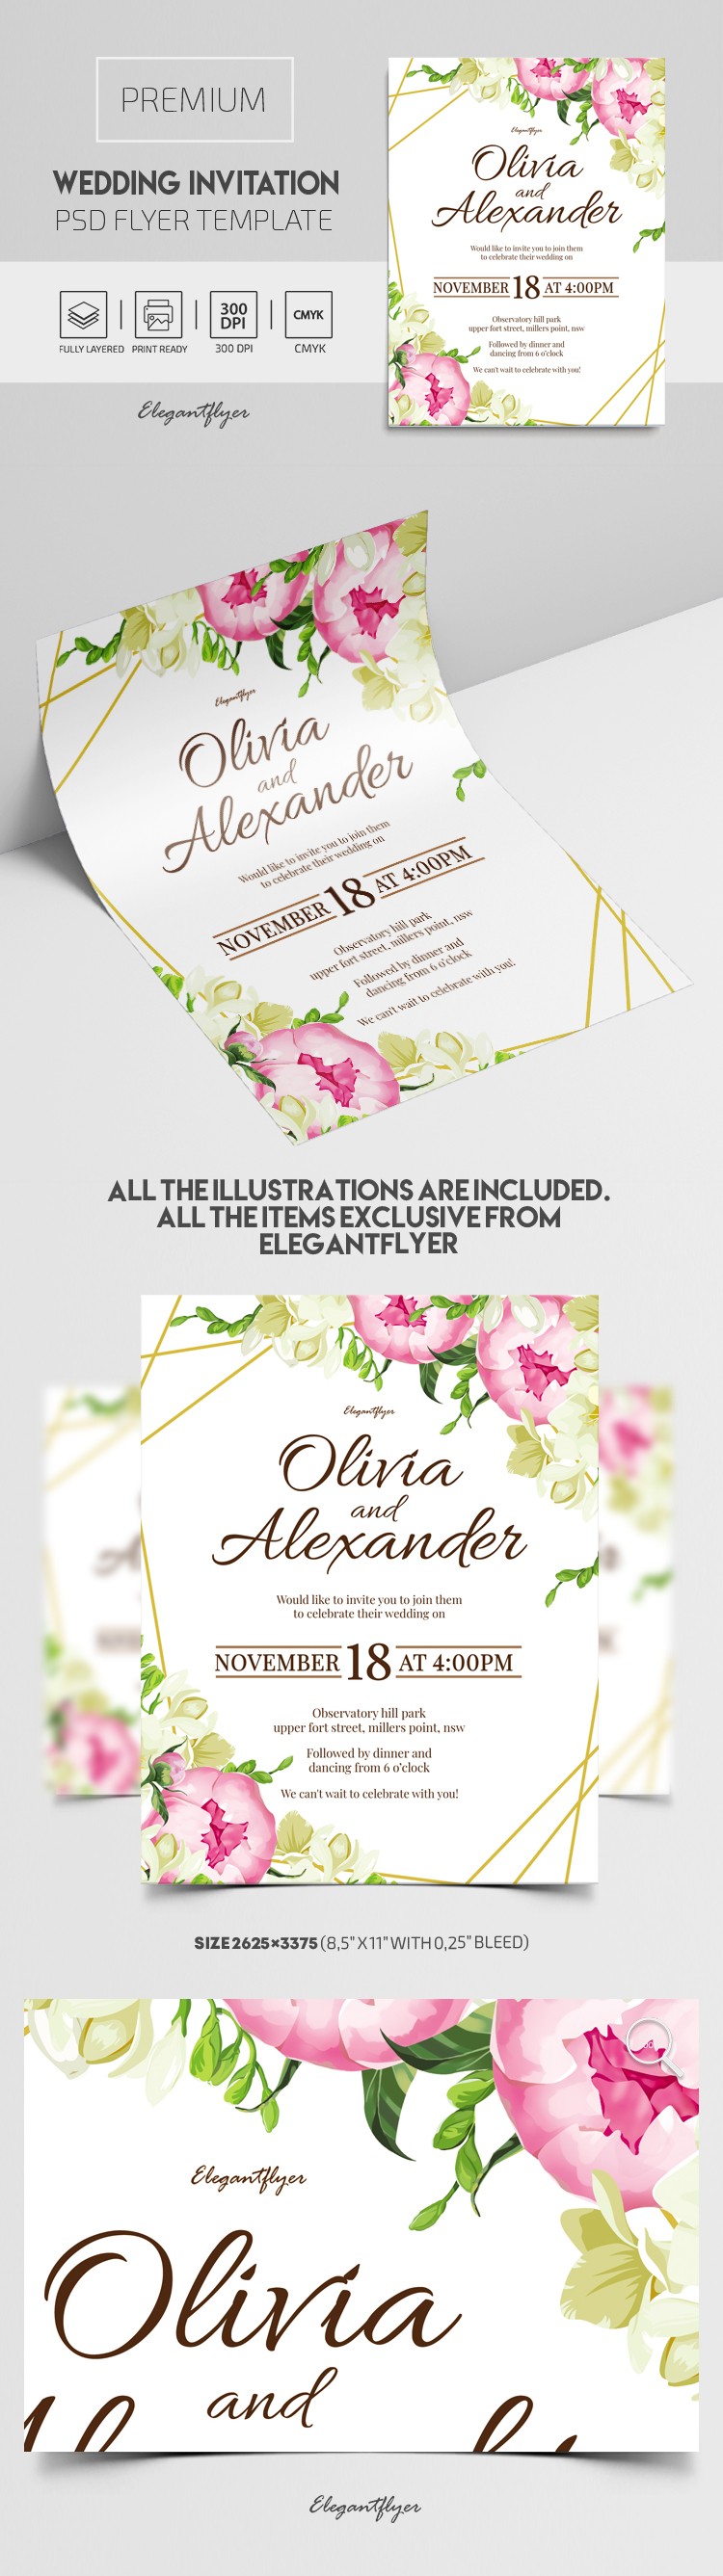 Convite de Casamento by ElegantFlyer